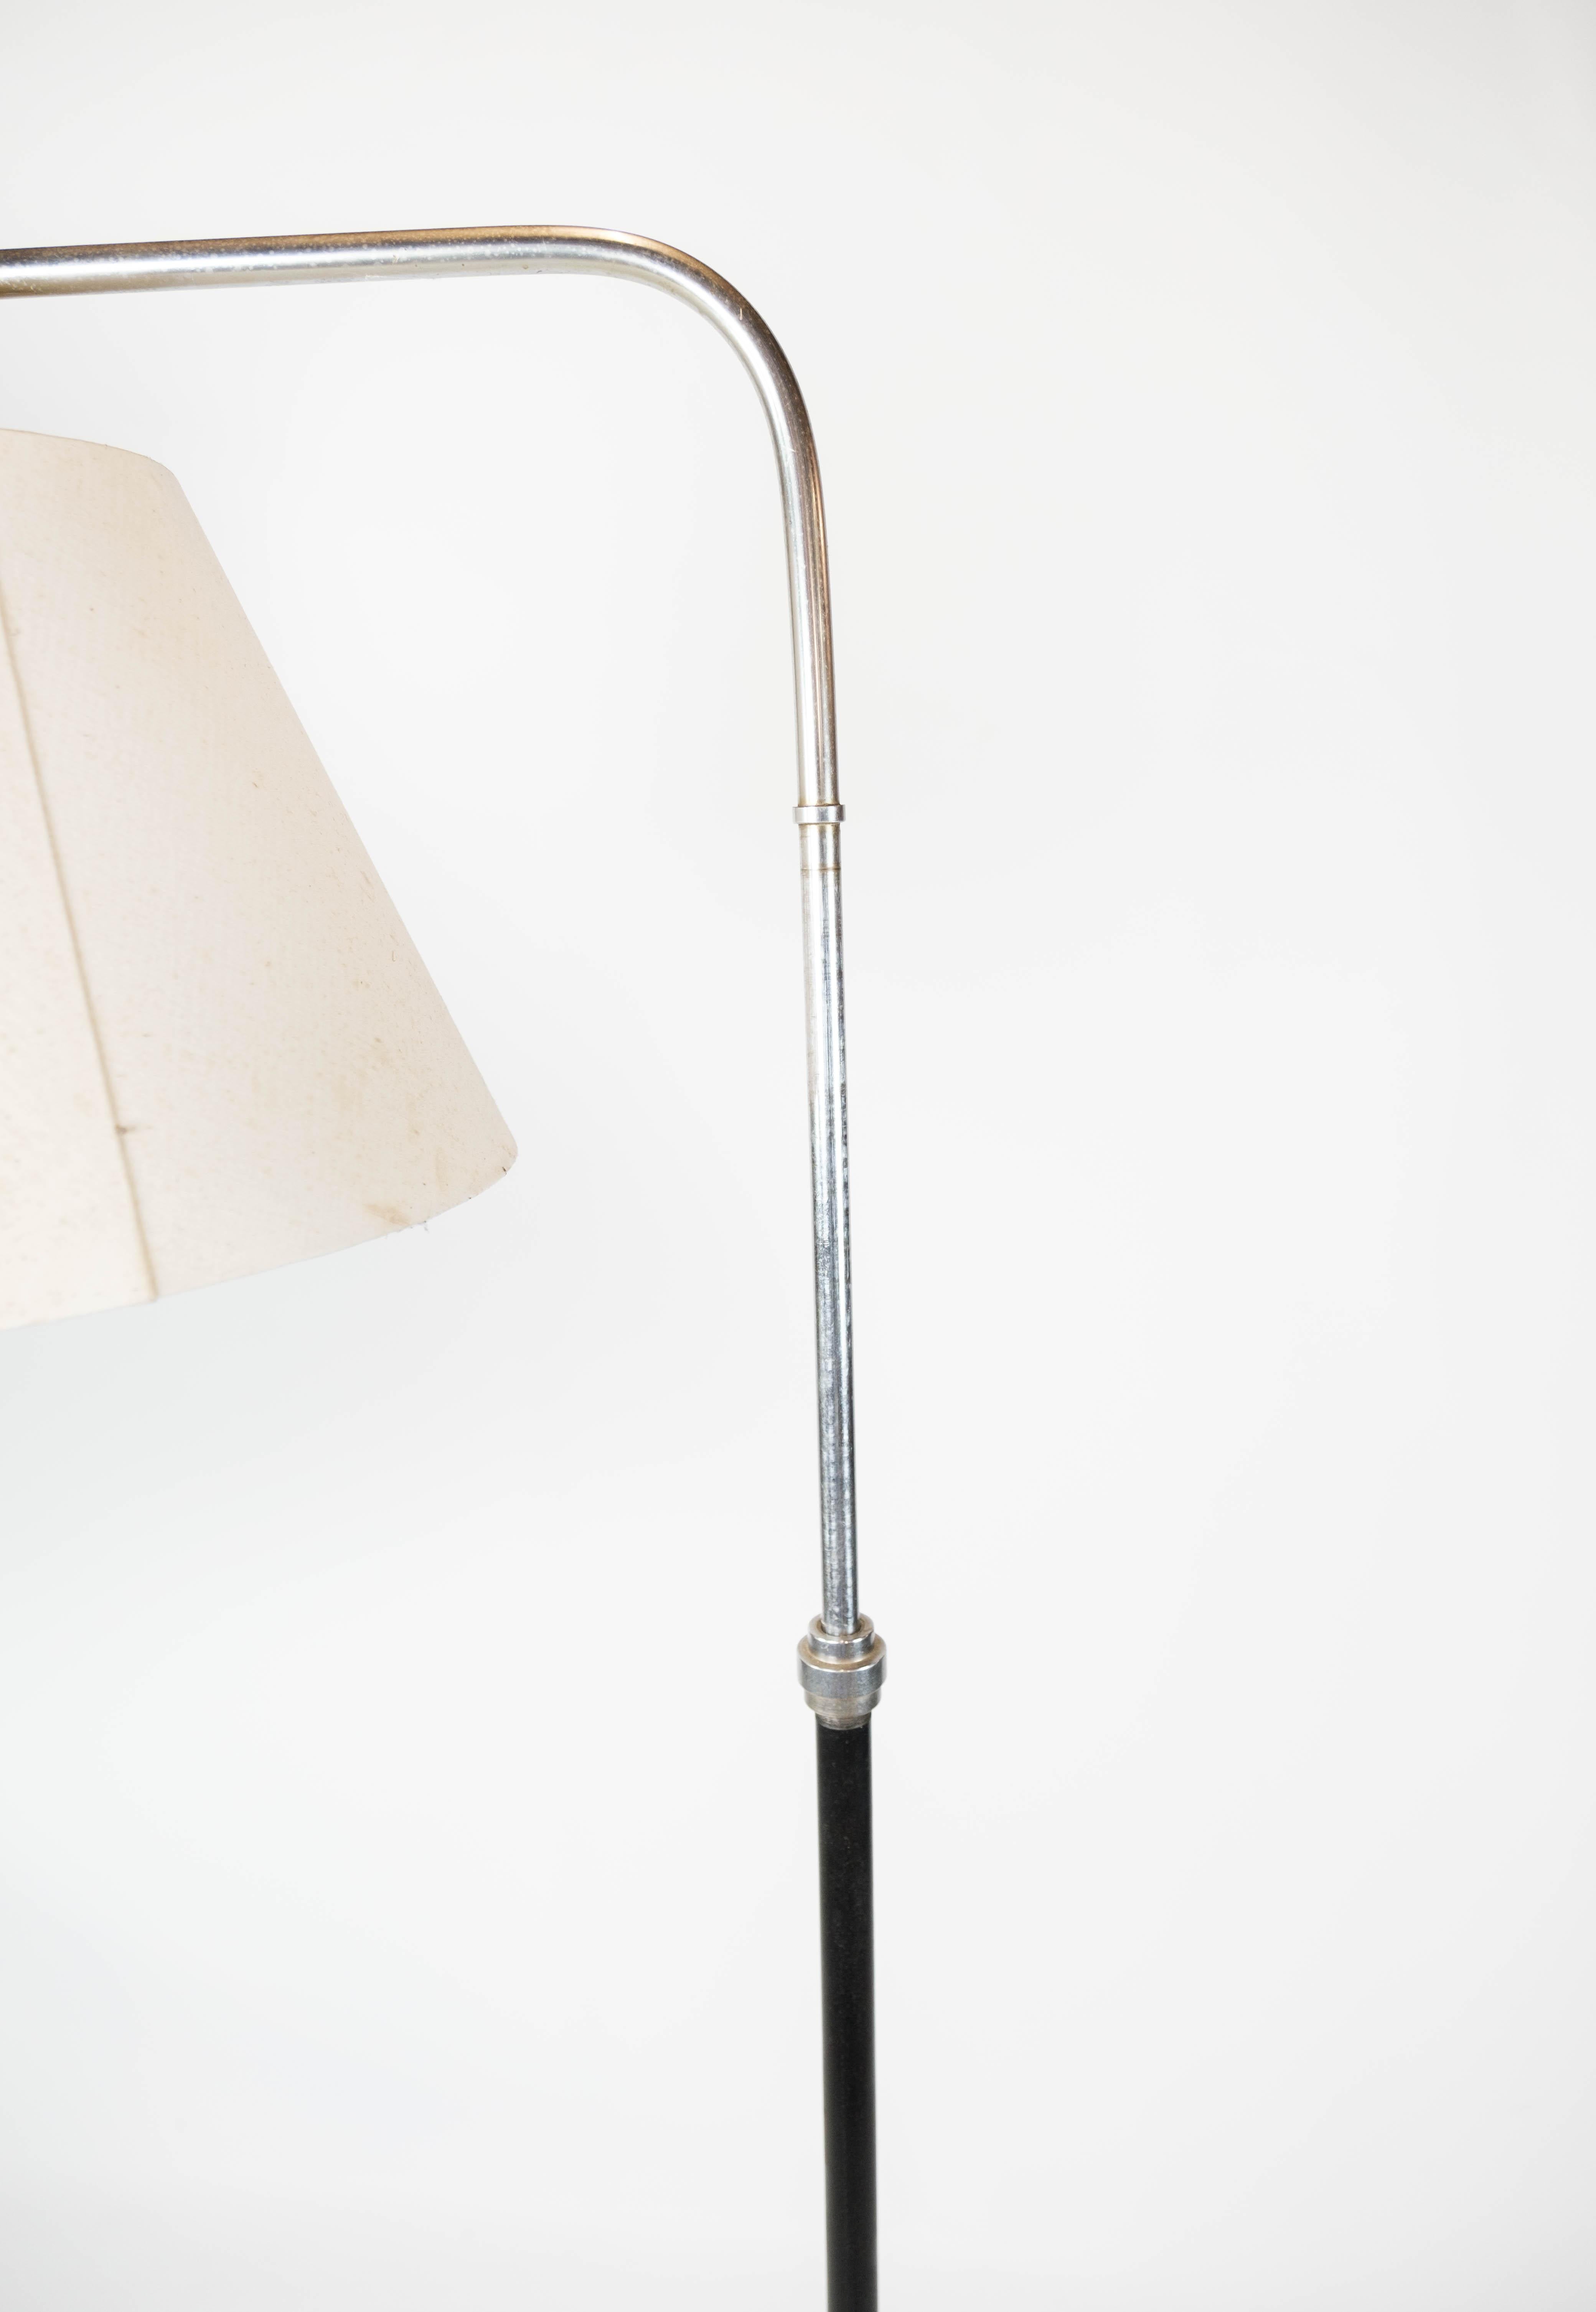 Scandinavian Modern Floor Lamp of Chrome and Black Painted Metal of Danish Design, 1970s For Sale